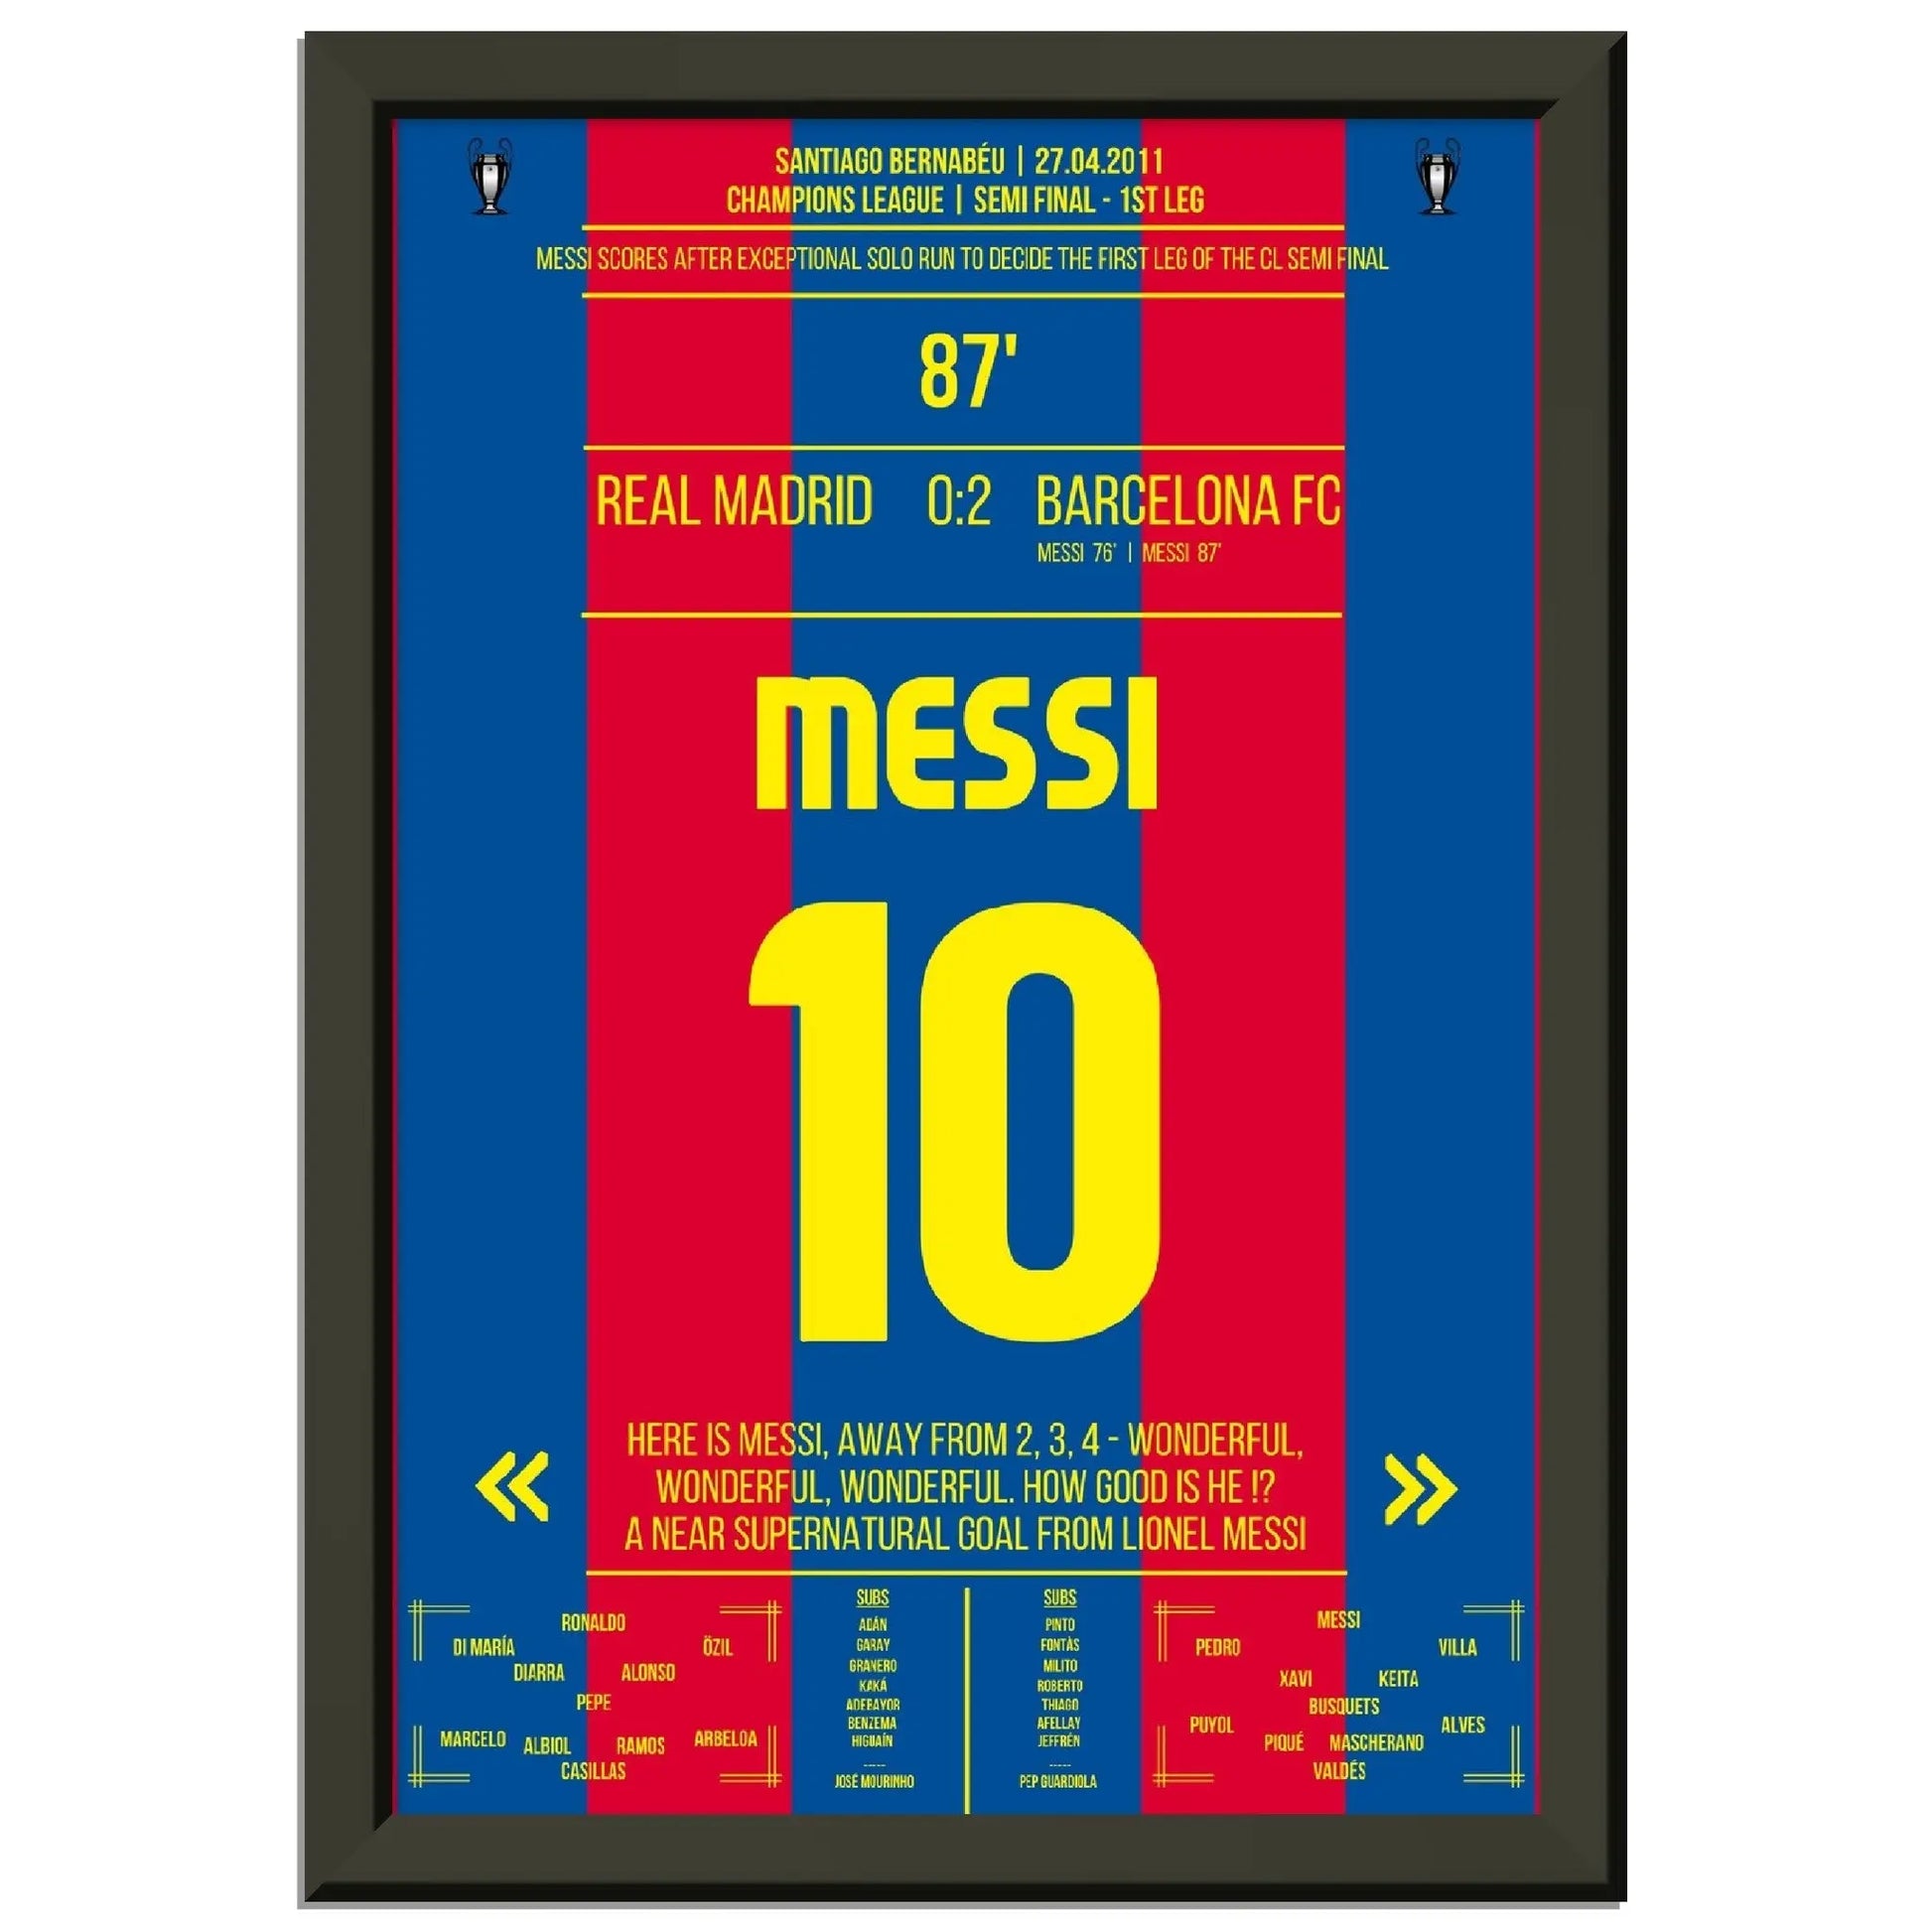 Messis unglaubliches Solo Tor gegen Real im Champions League Halbfinale 2011 